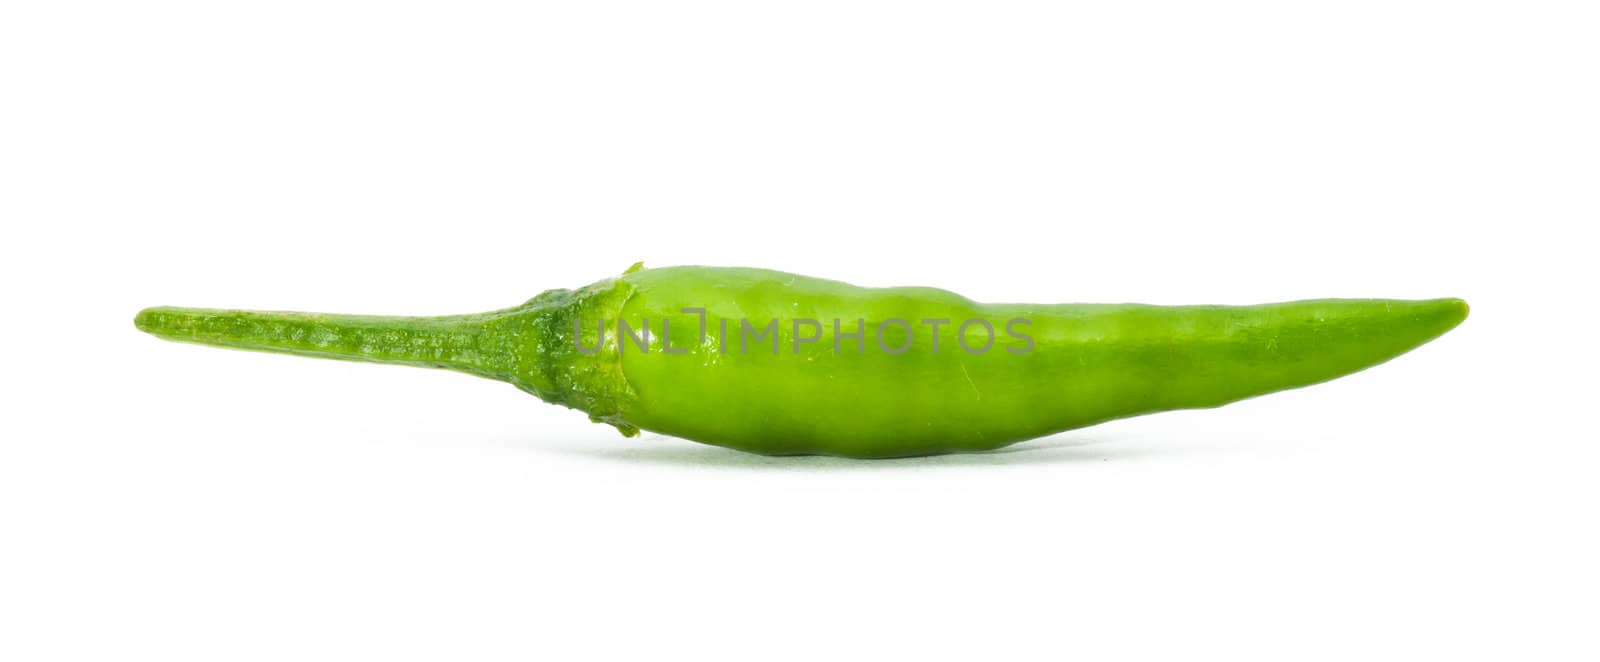 green chili on white background by heinteh